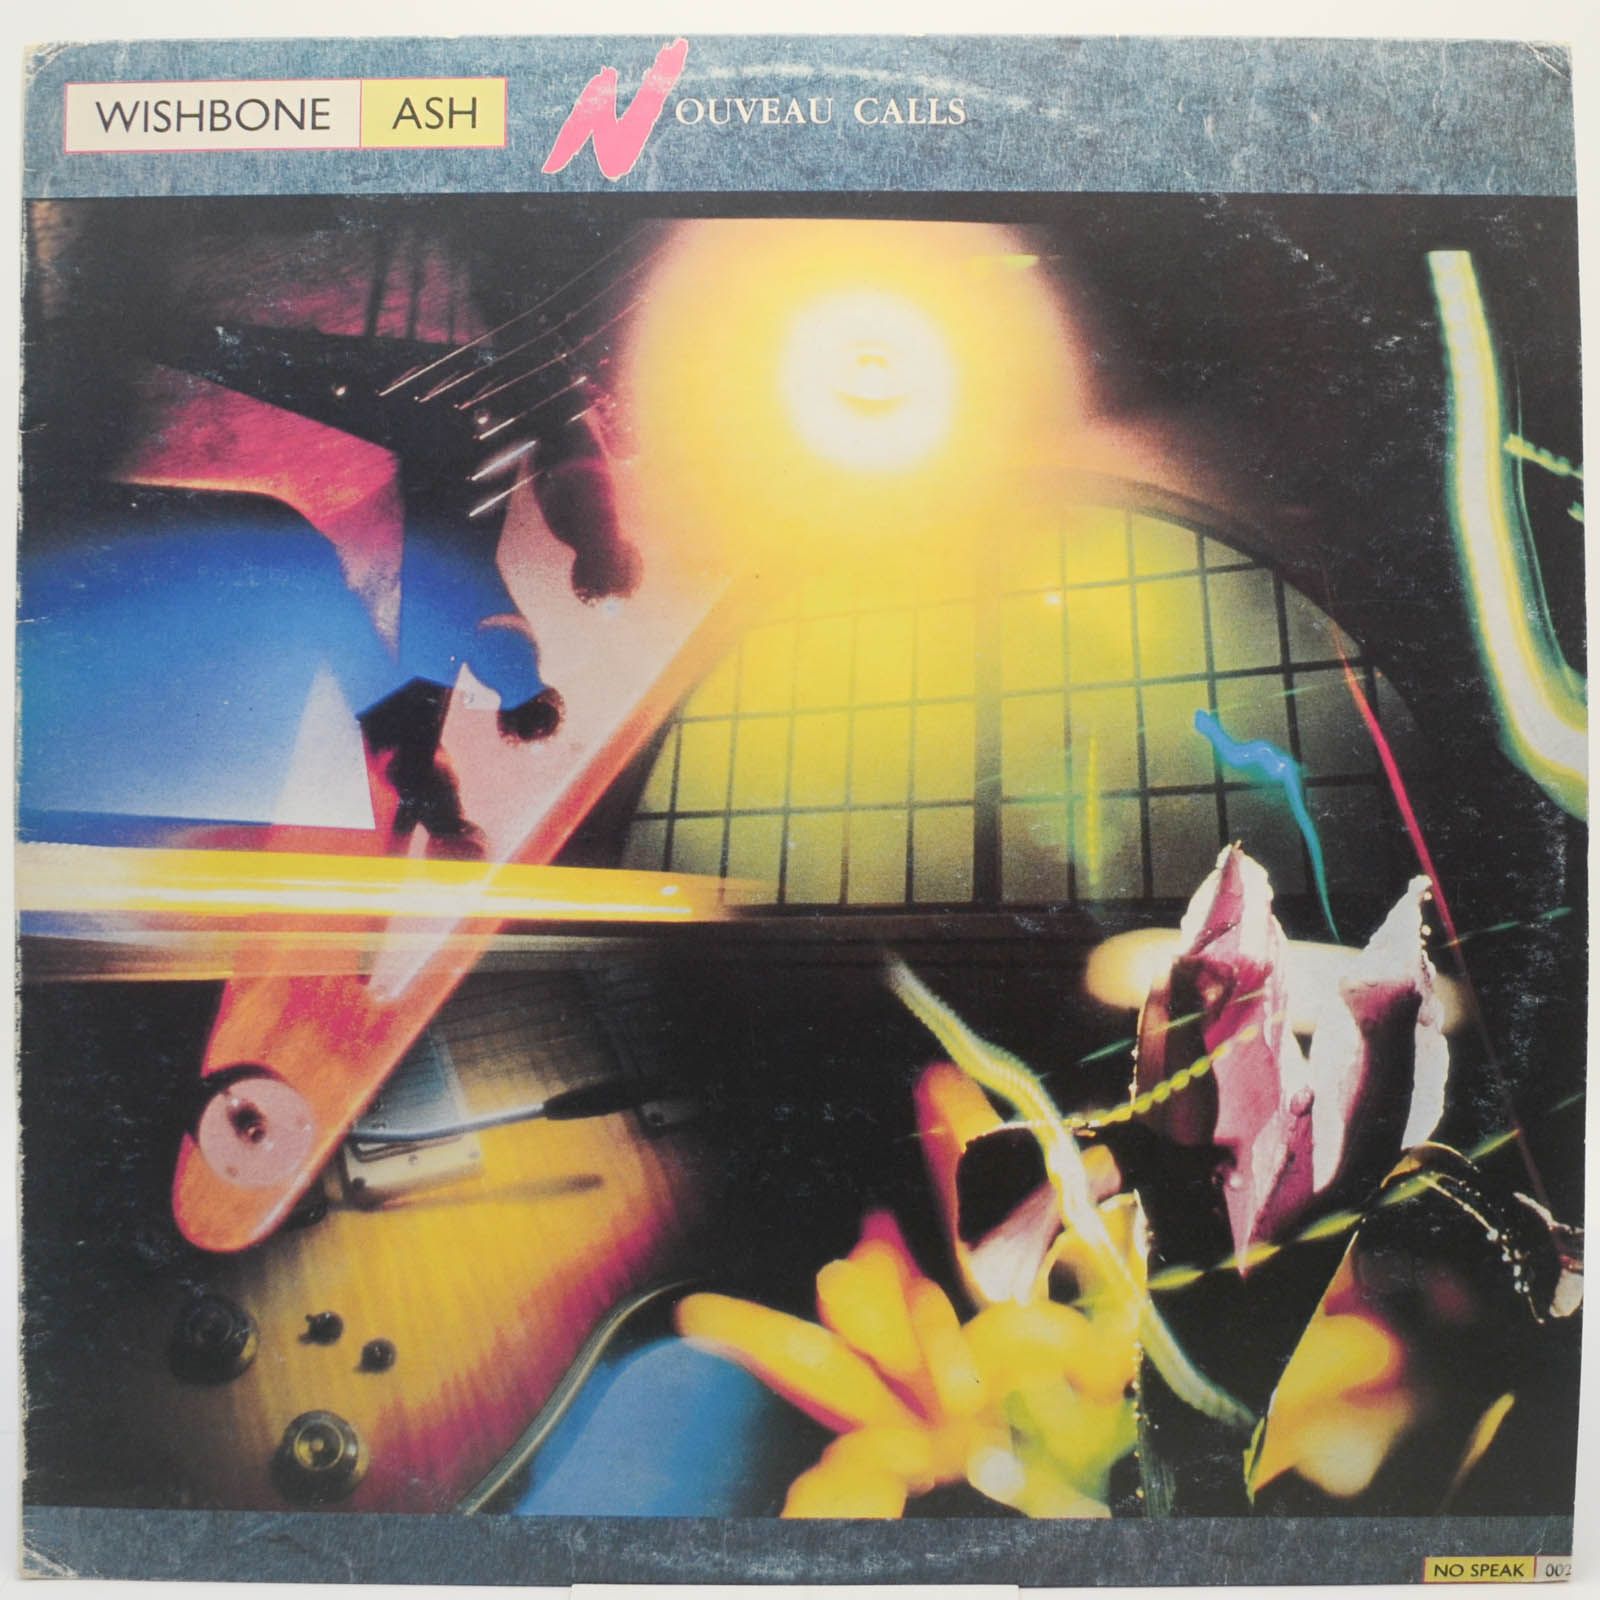 Wishbone Ash — Nouveau Calls, 1987